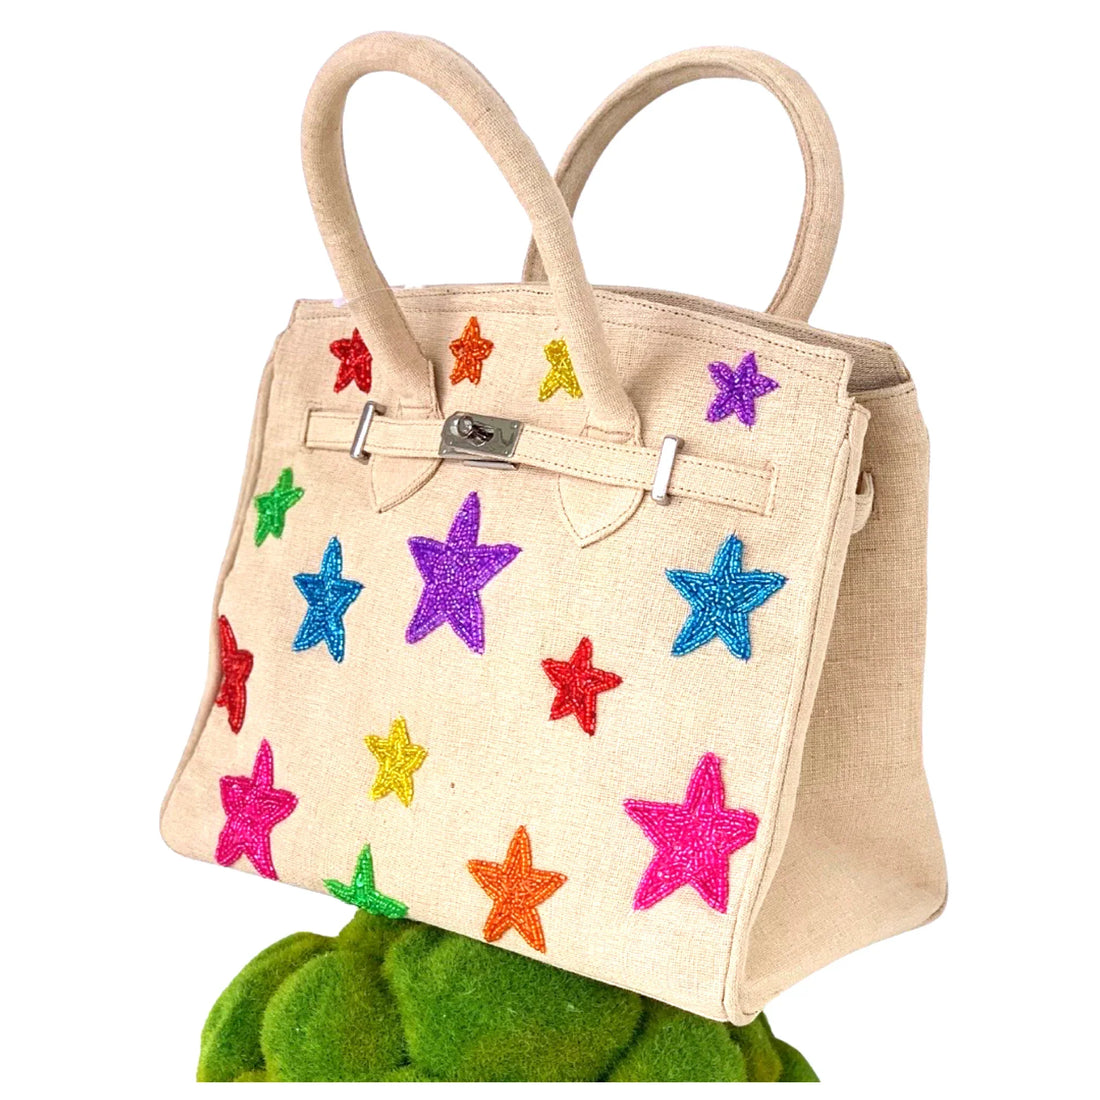 Shop Handmade Beaded Stars Canvas Bag - Premium Handbag from Tiana New York Online now at Spoiled Brat 